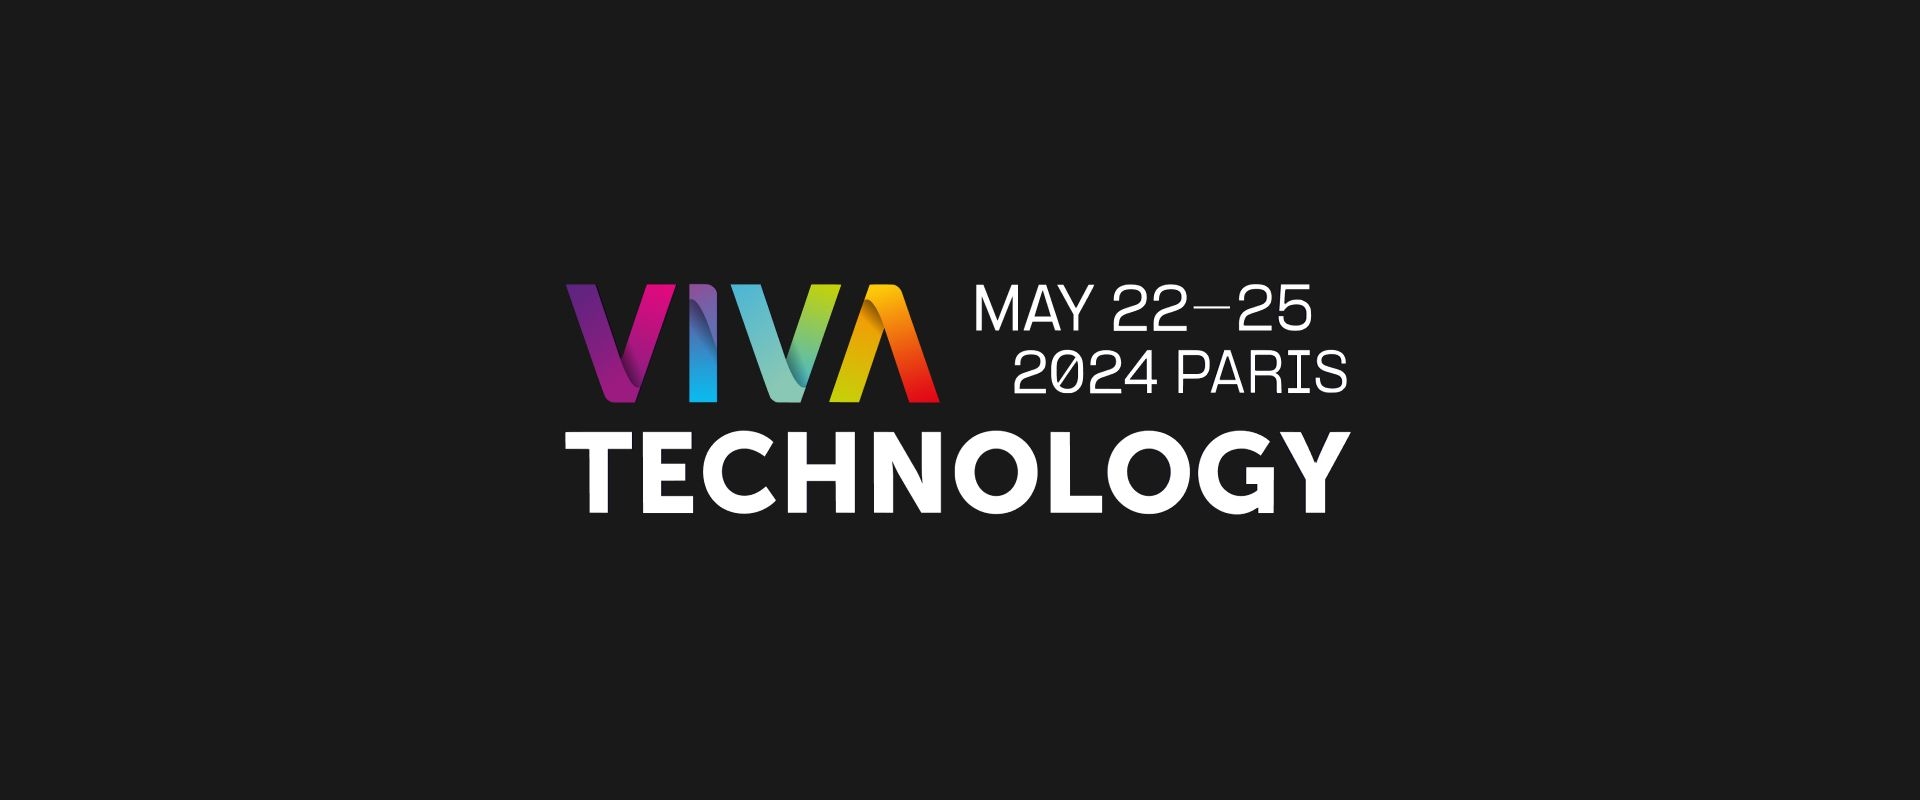 VIVA tech 2024 Paris | ilink press-release